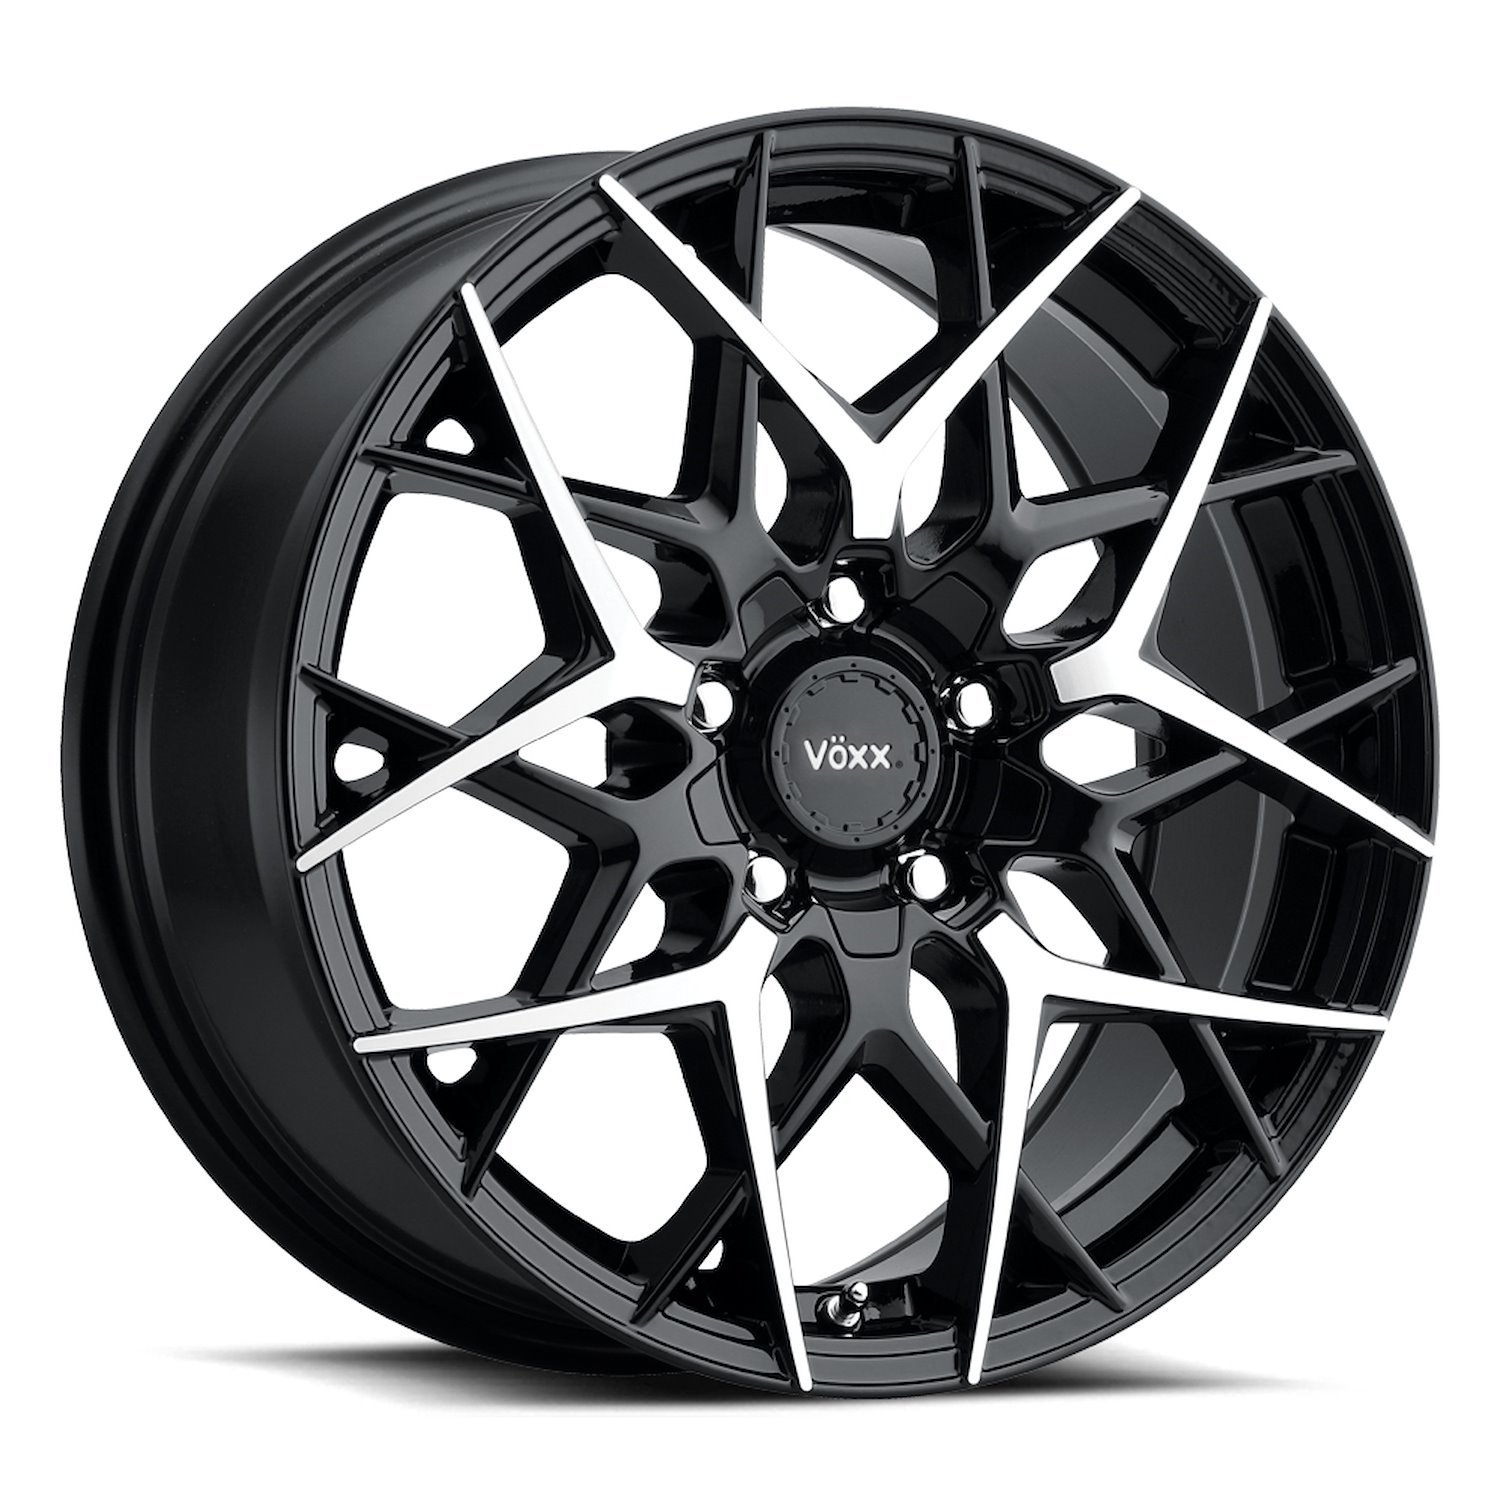 PAS 775-5003-40 GBMF Paso Wheel [Size: 17" x 7.50"] Finish: Gloss Black w/Machined Face